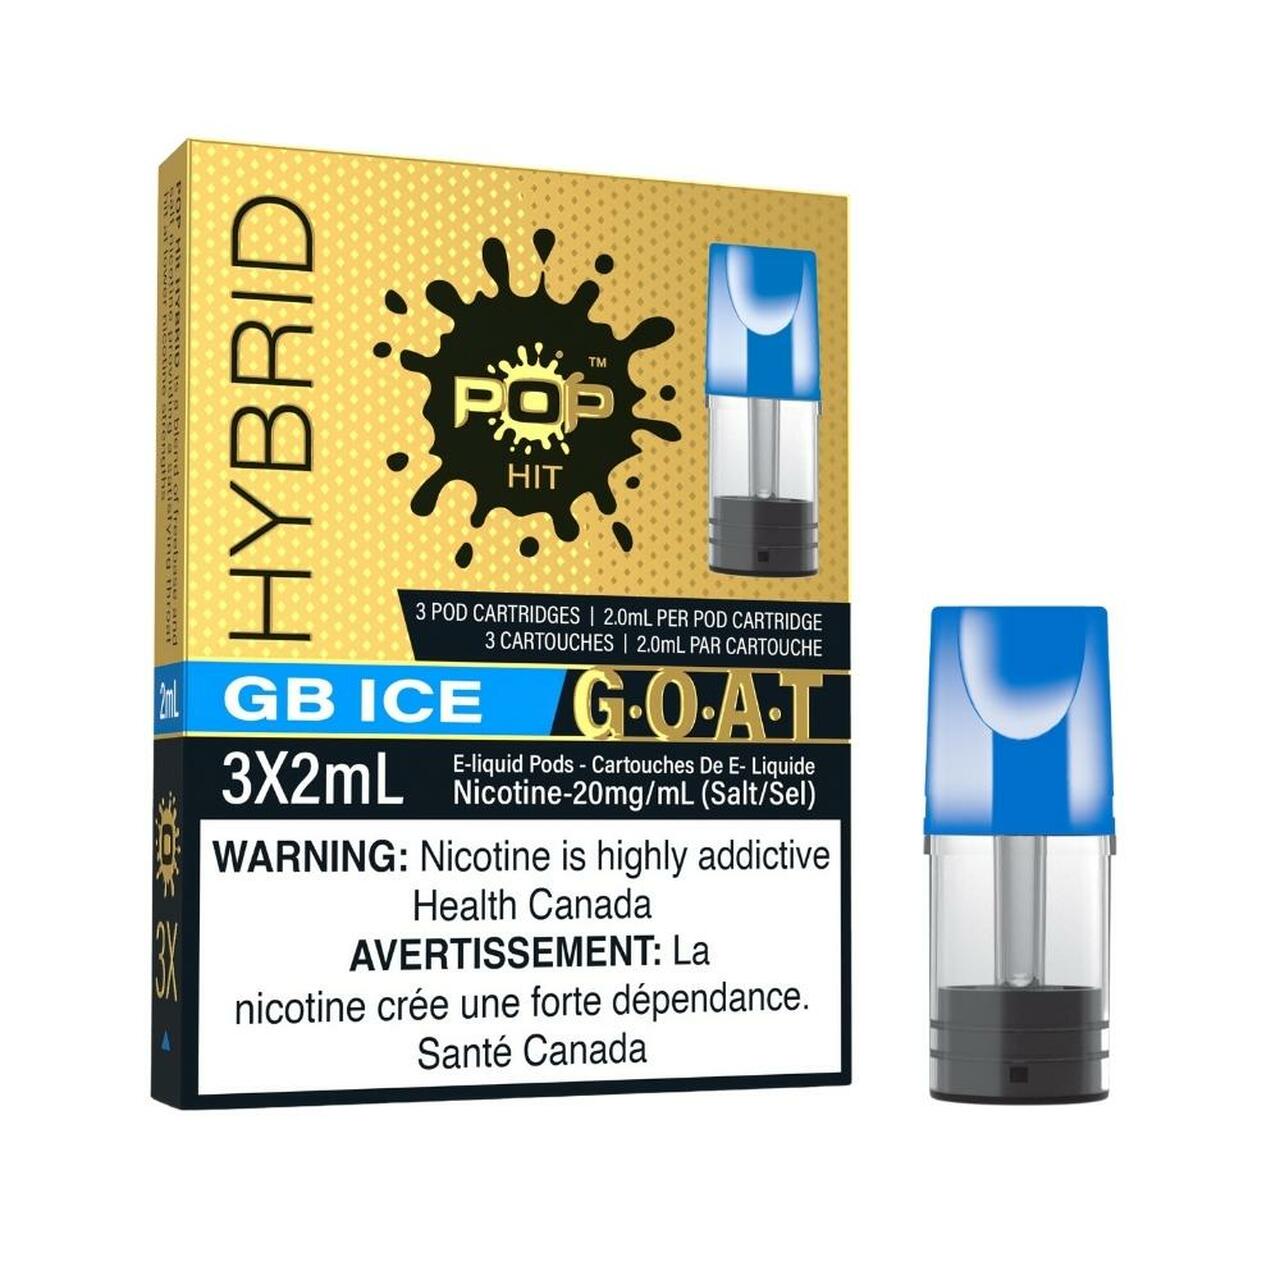 GB Ice (GOAT) - Pop Hit Hybrid - 20mg - 5pc/Carton - EXCISED